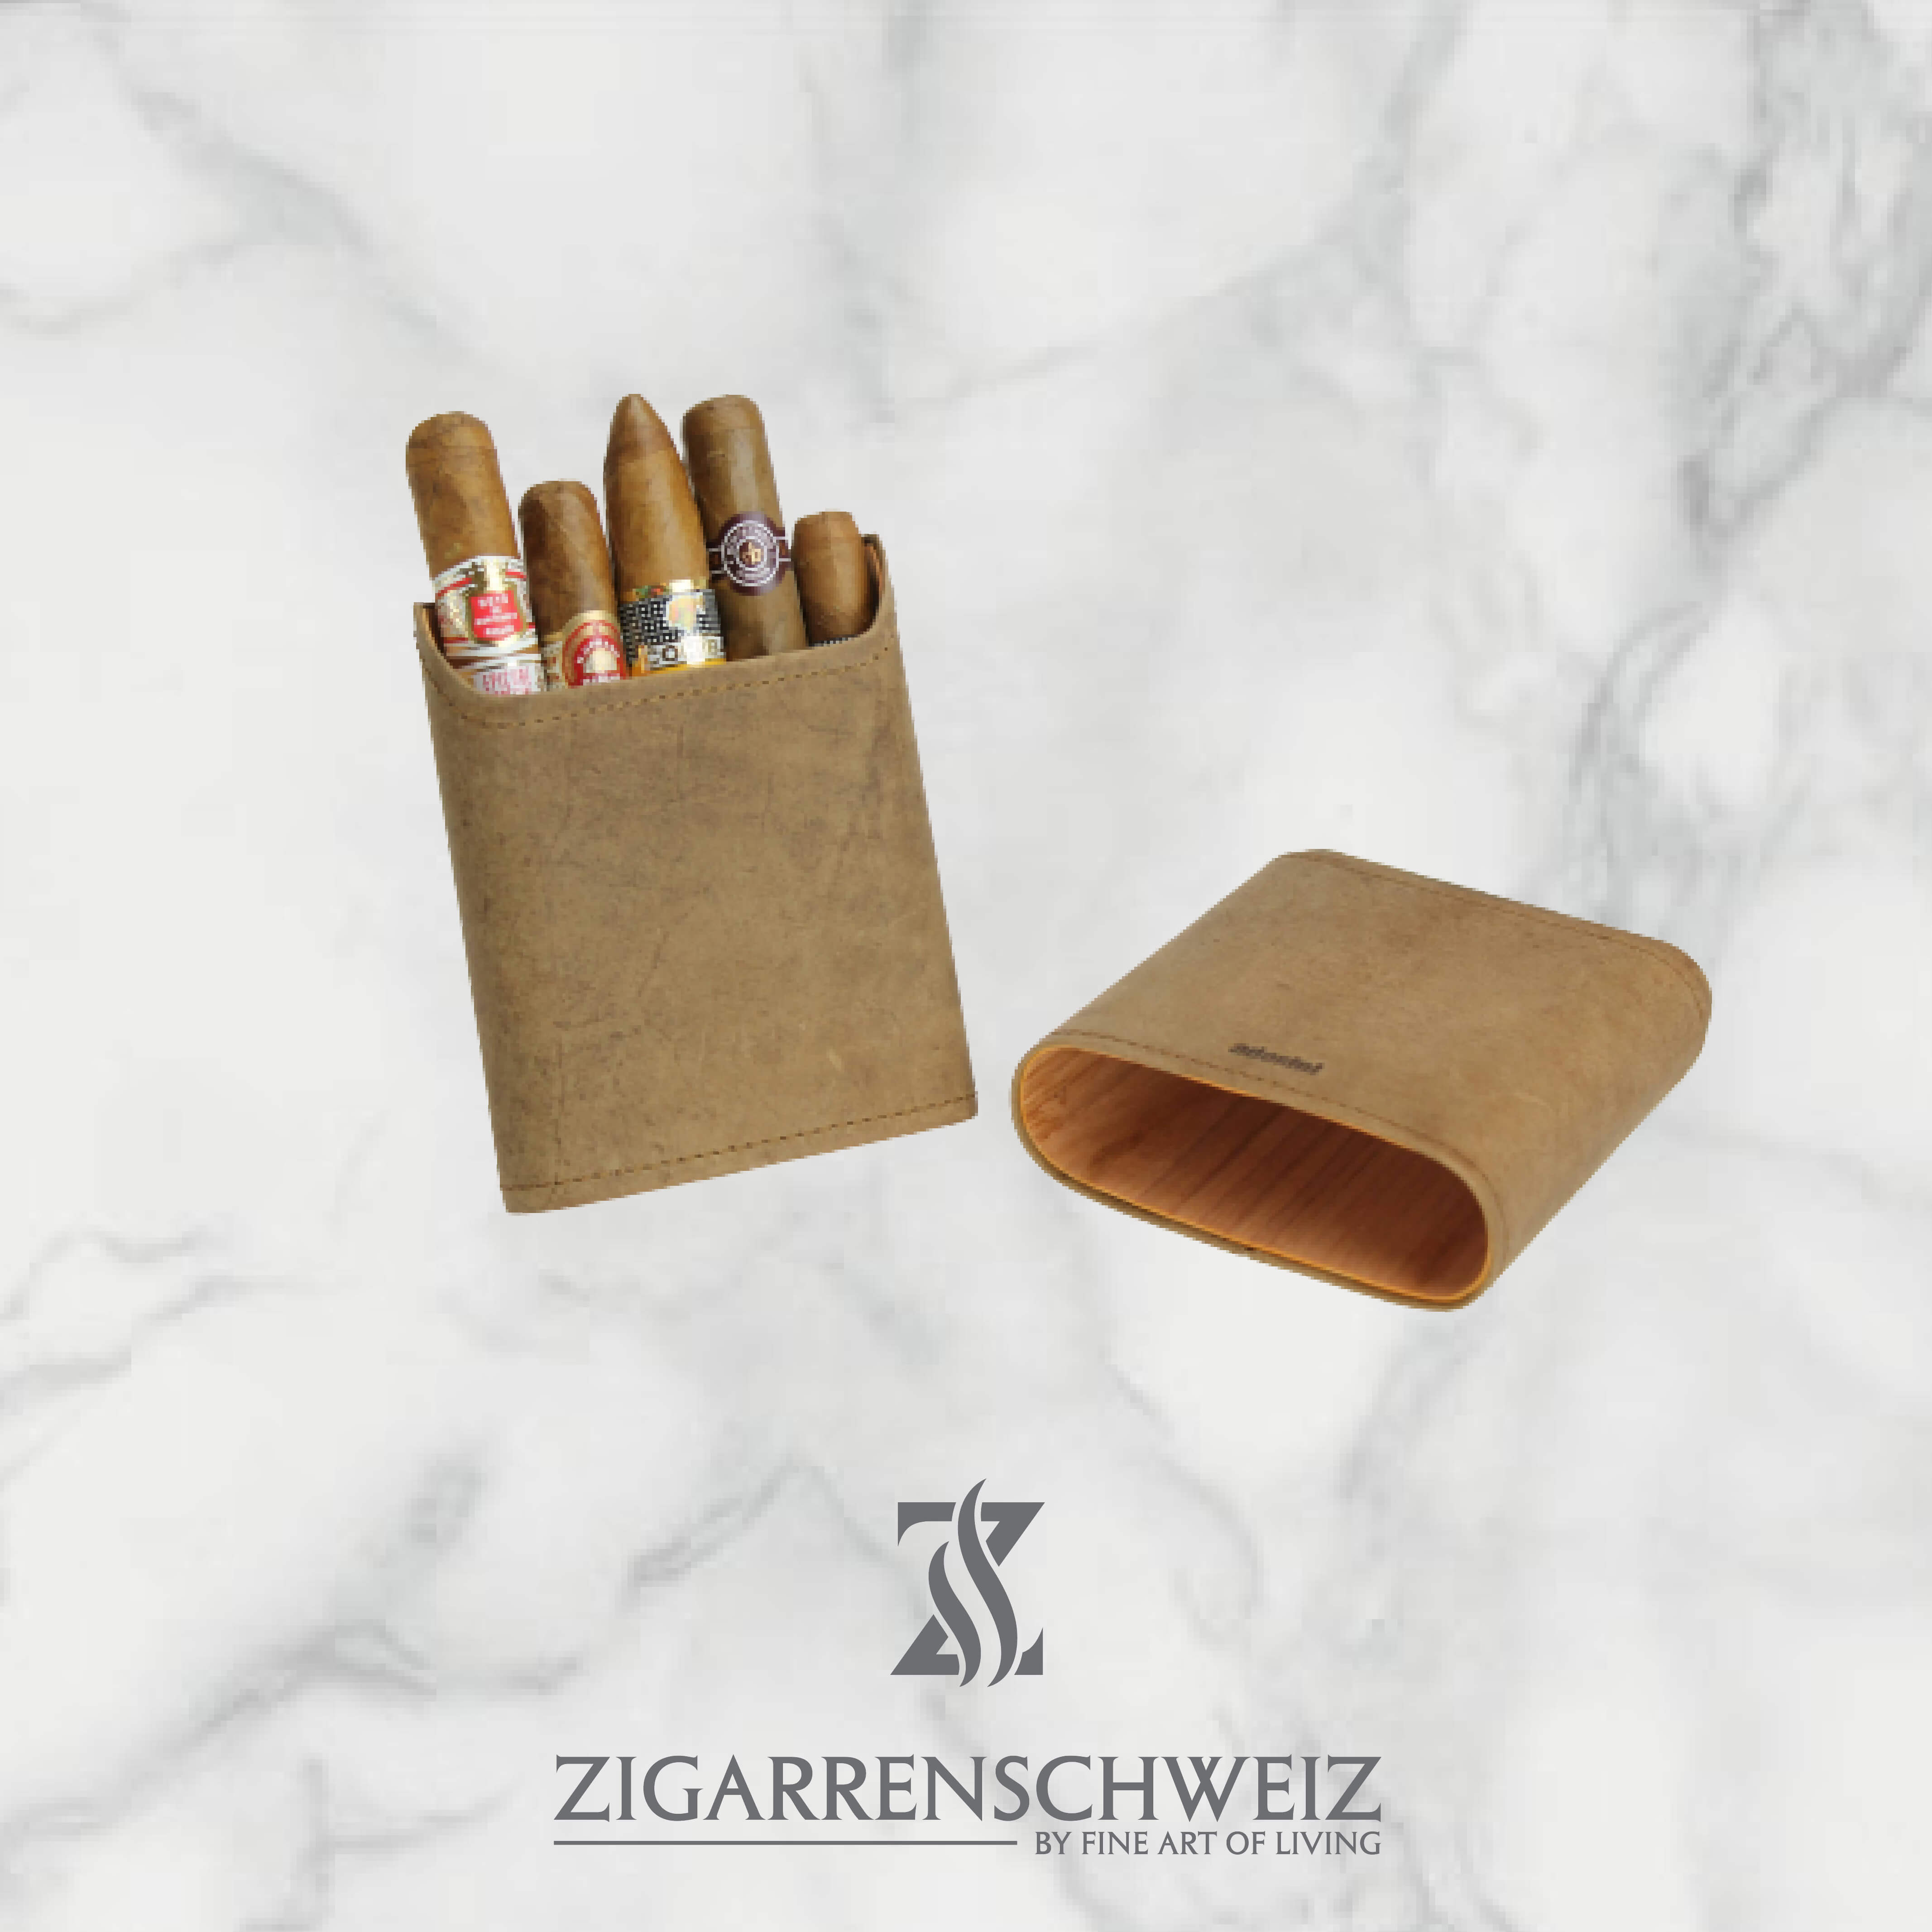 Adorini Zigarrenetui, Material: Echtleder, Kapazität: 3-5 Zigarren, Farbe: Braun, geöffnet